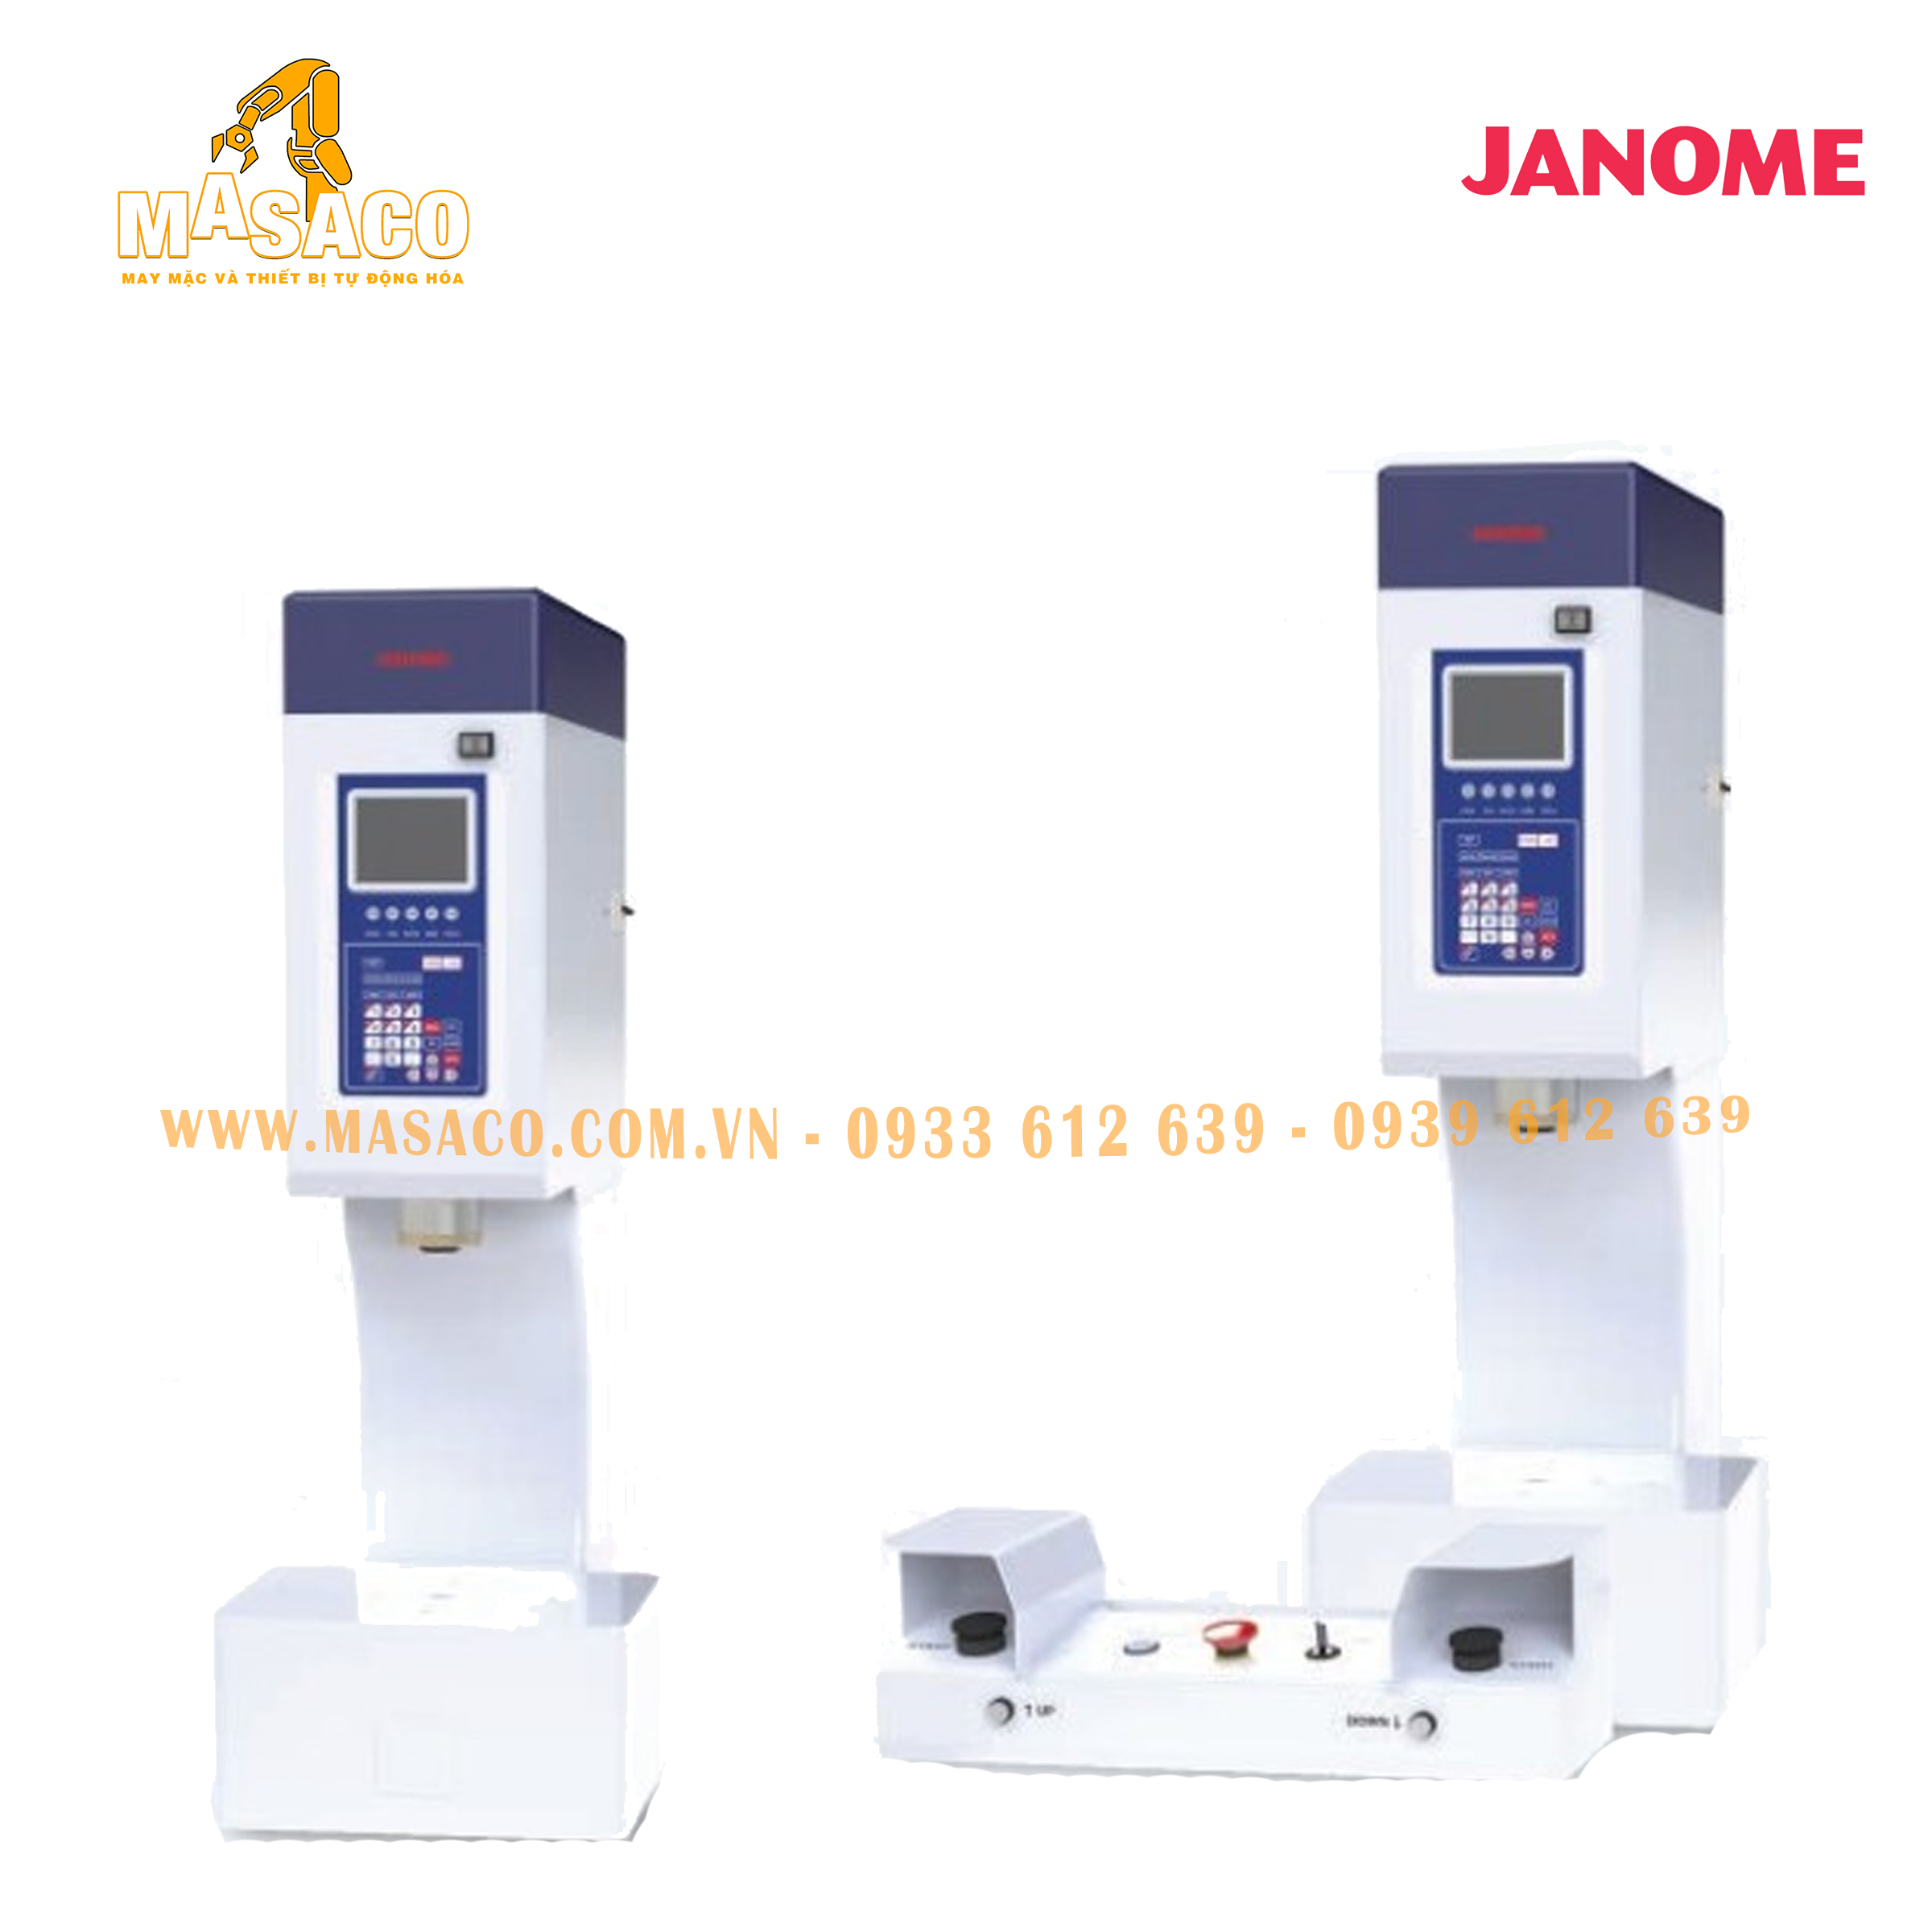 janome-servo-press-jp-series-5-stand-alone-type-flexible-model